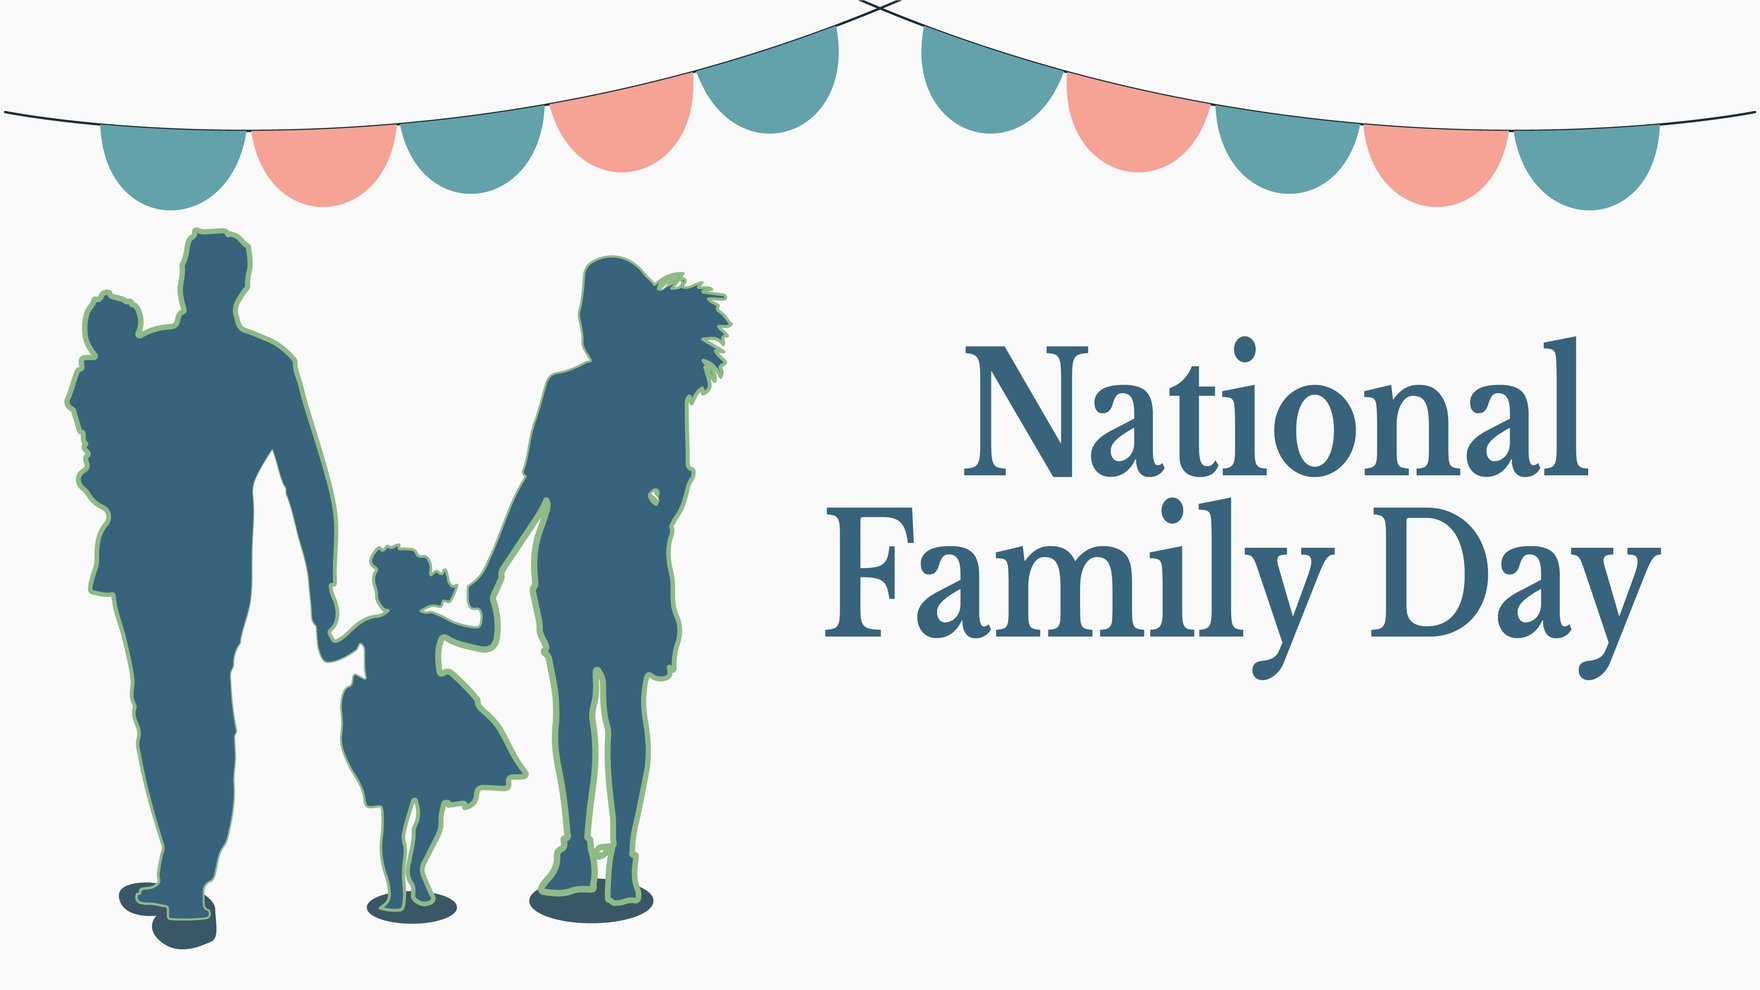 National Family Day Image Background in PSD, Illustrator, PDF, SVG, JPG